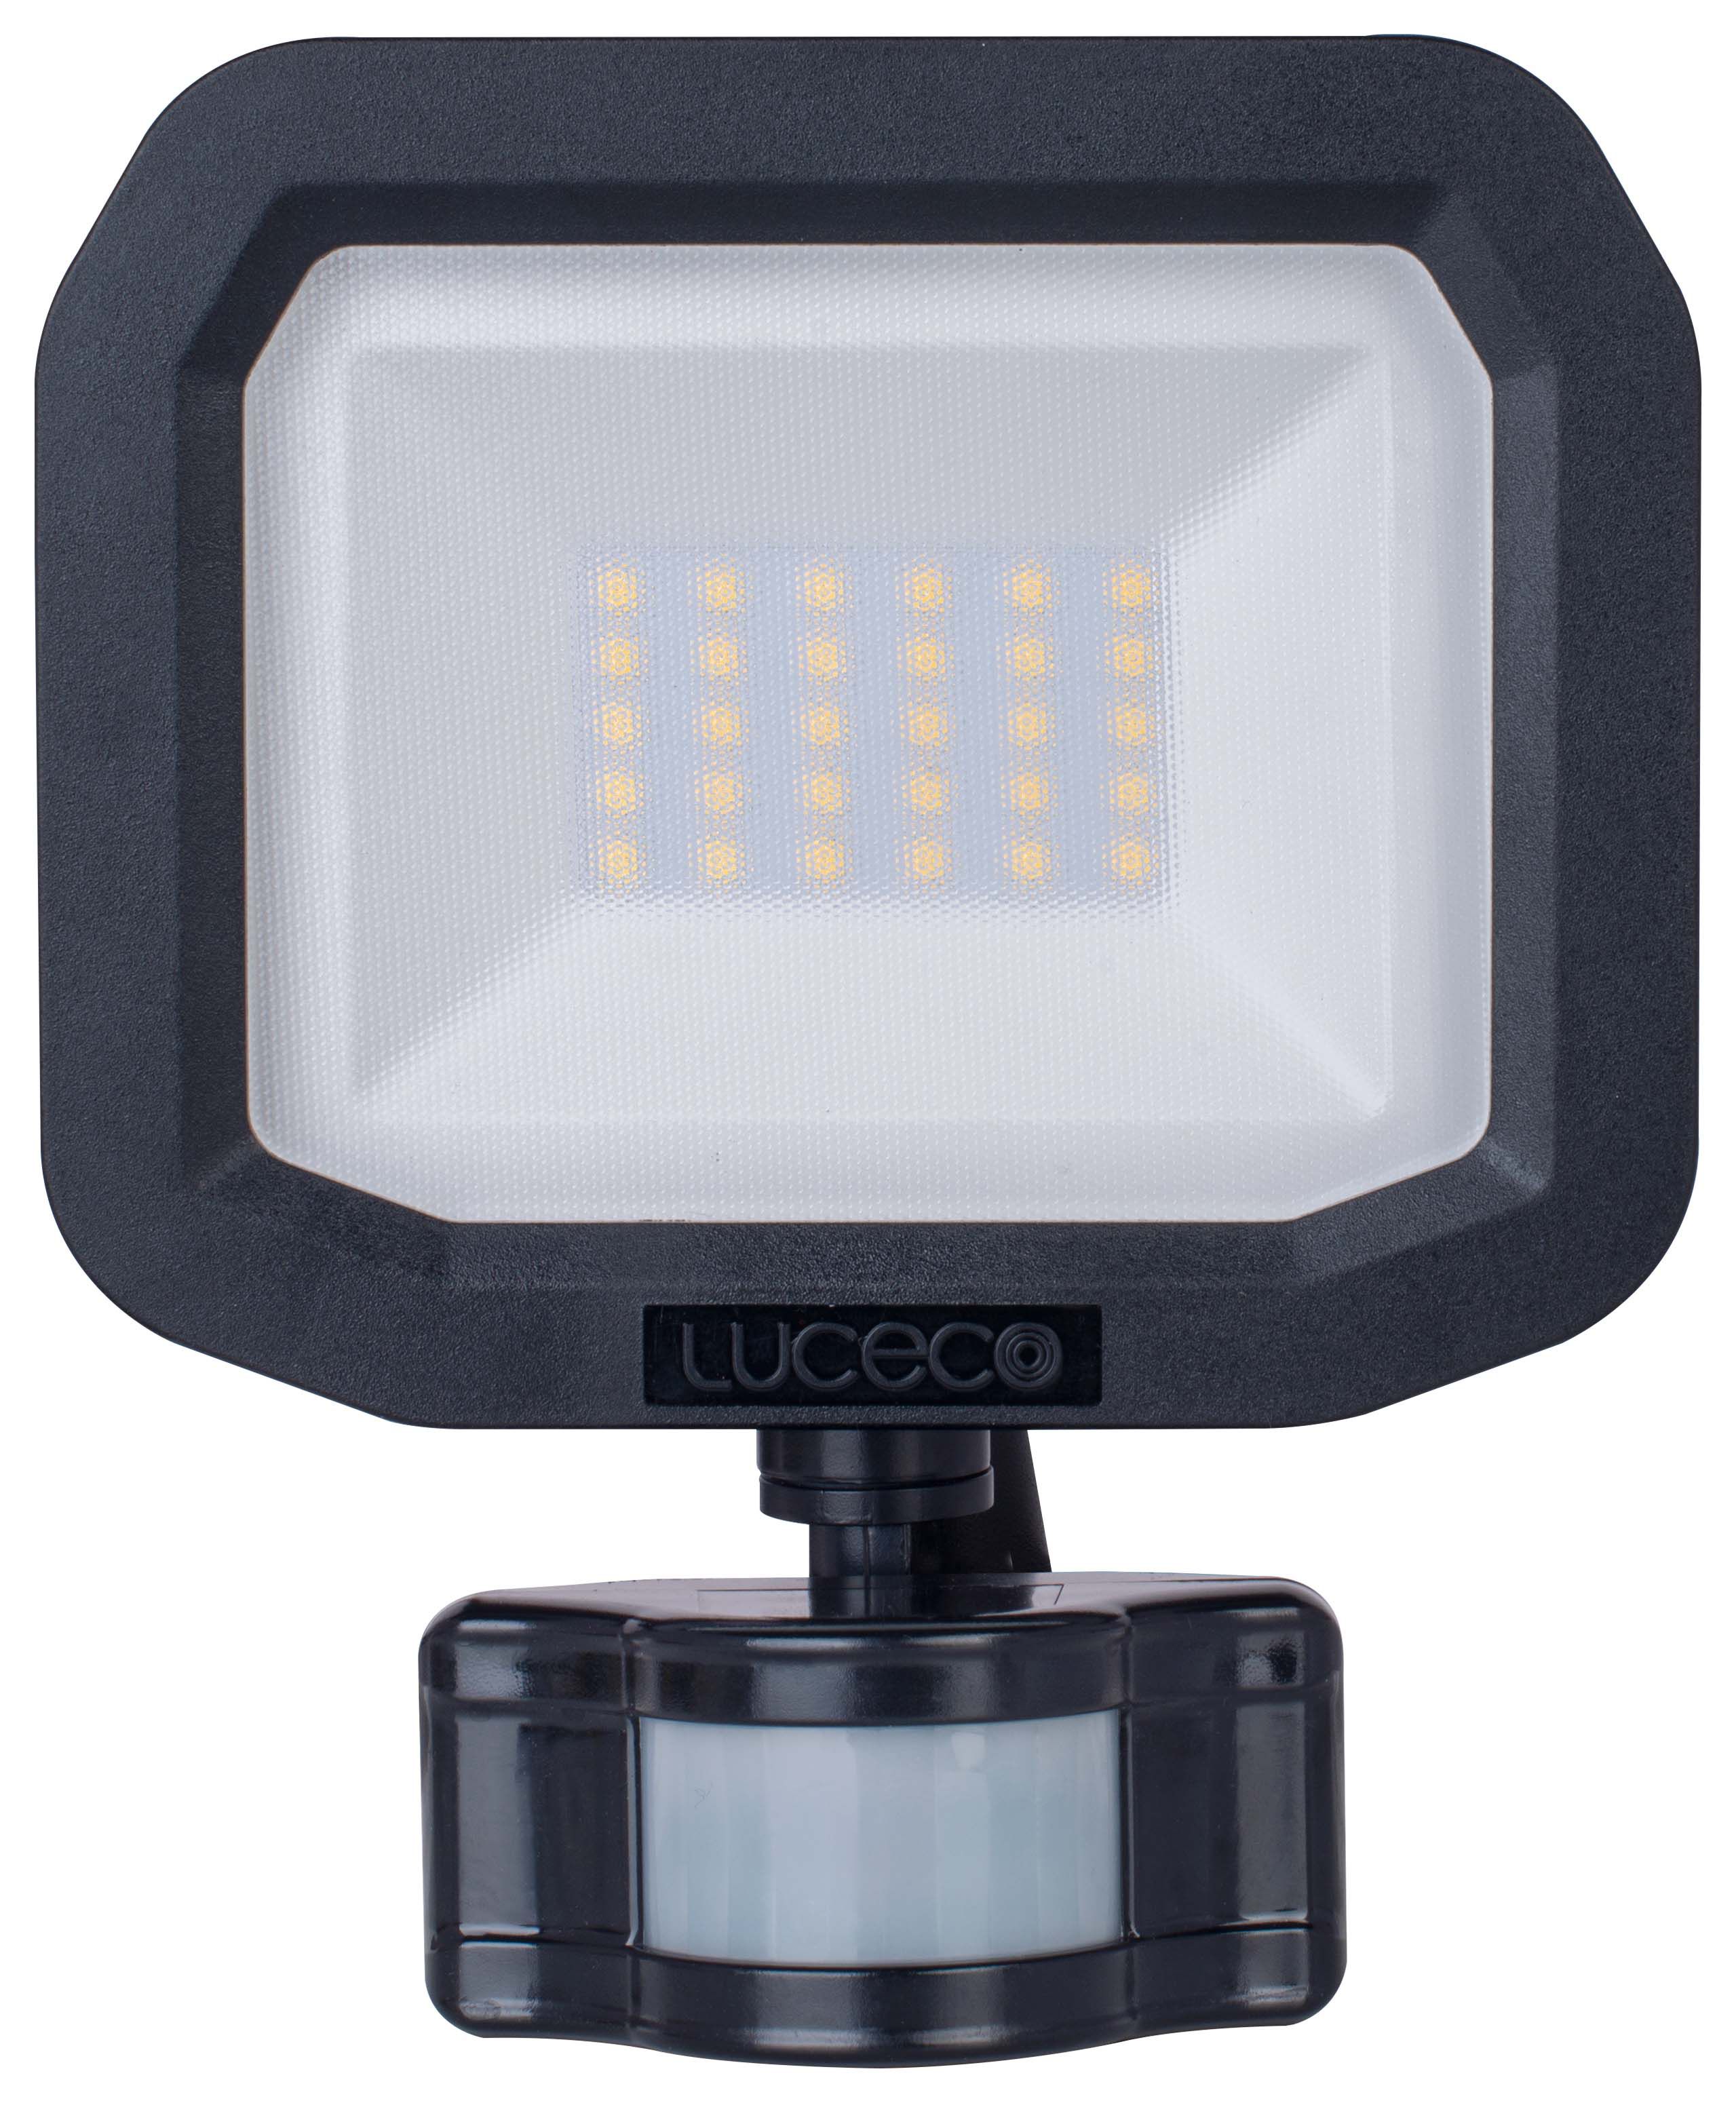 Image of Luceco BG Home Eco Floodlight with Smart PIR 2400LM - 20W